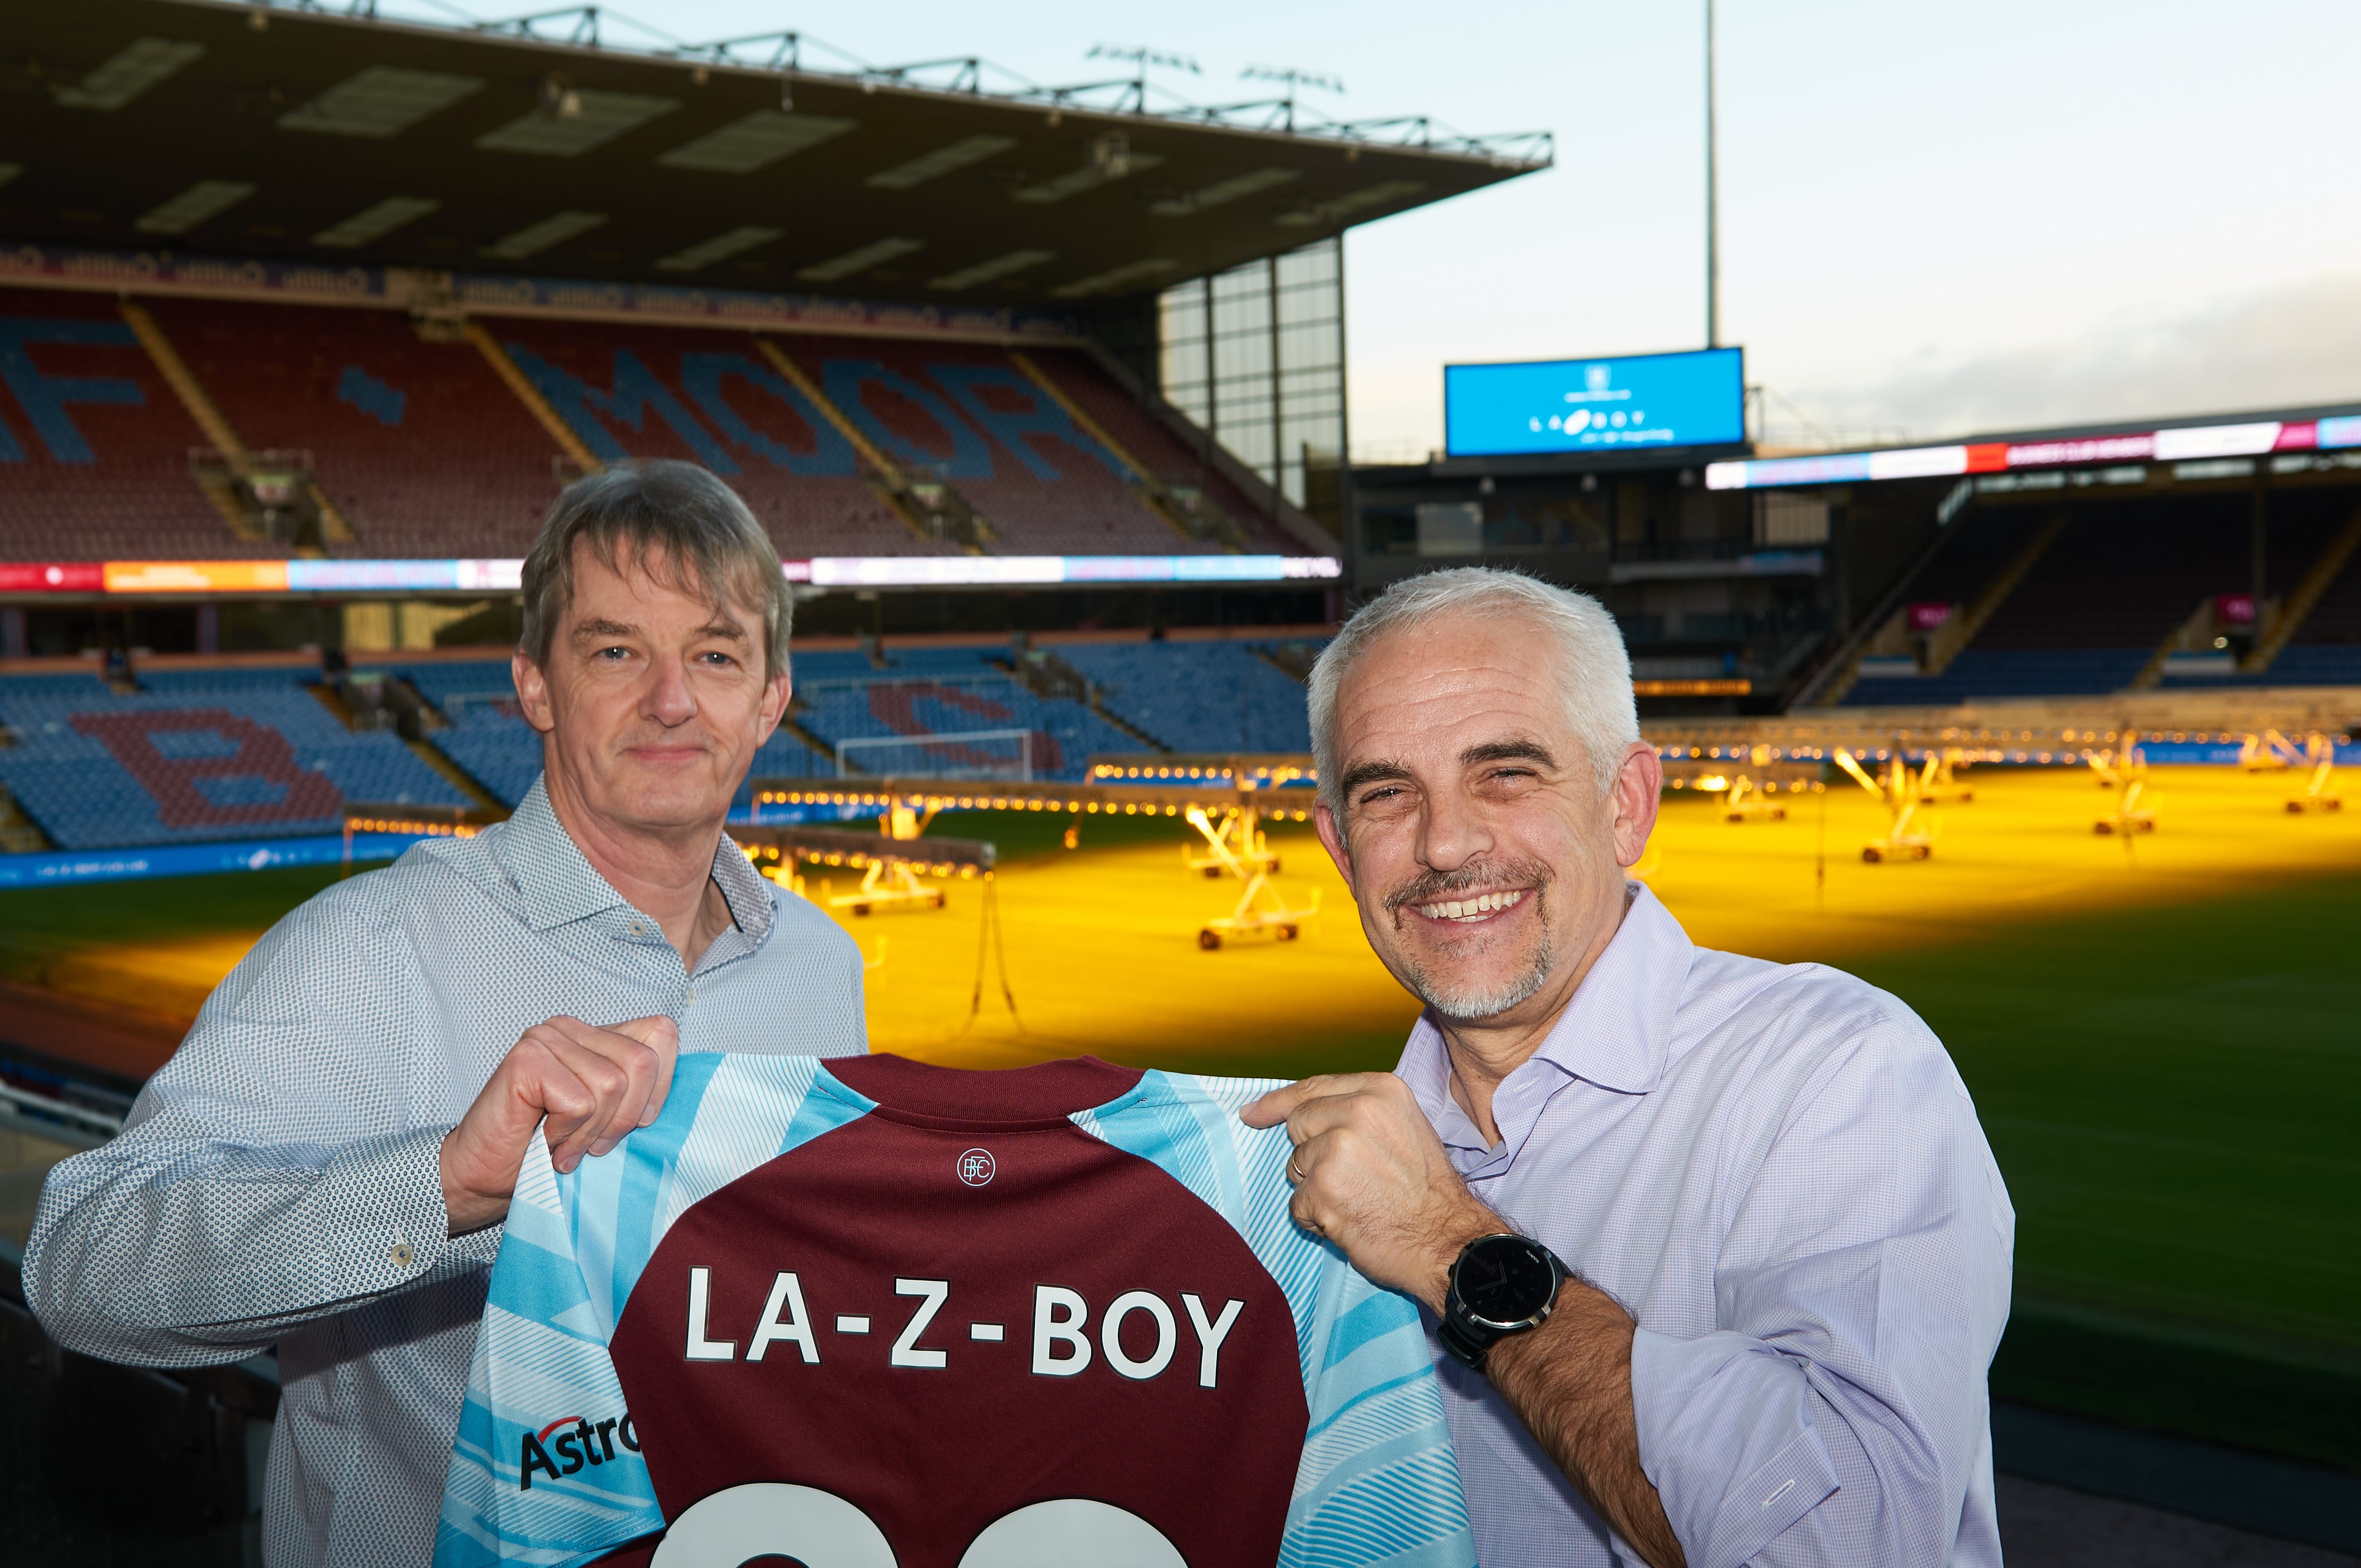 La-Z-Boy UK becomes latest Business Club Plus members at Turf Moor image